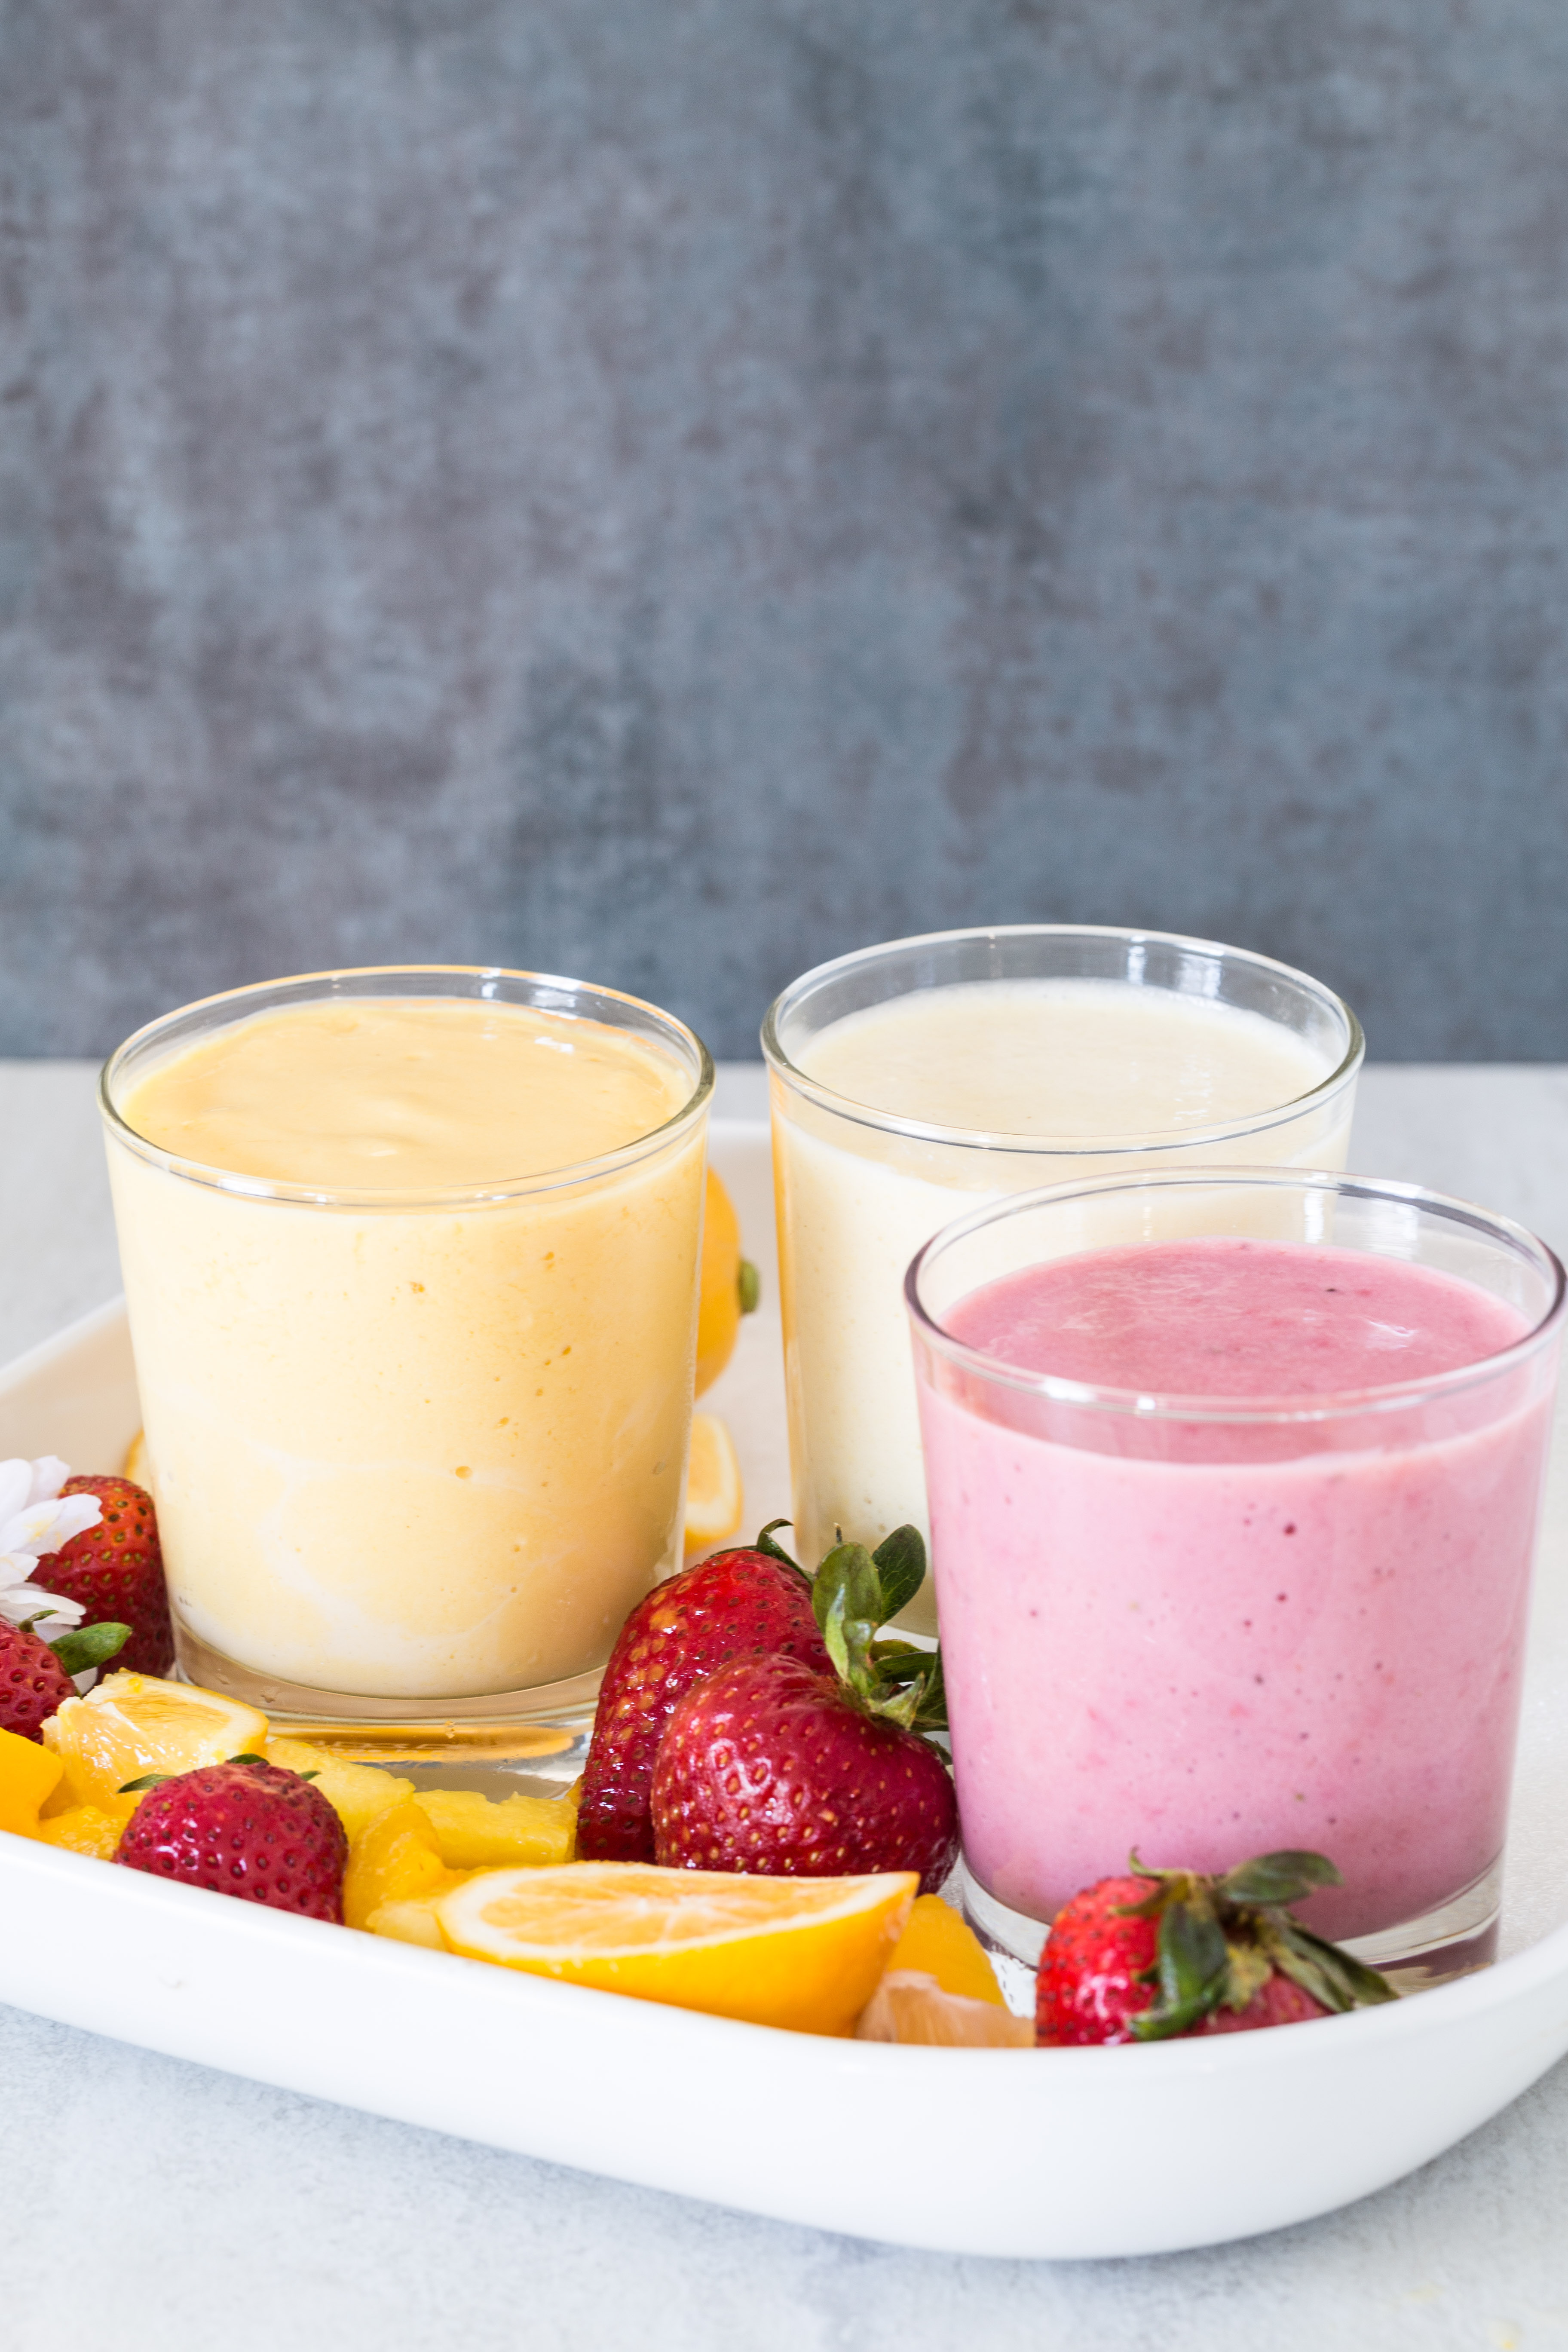 Yogurt protein smoothie 3 ways - Eat Good 4 Life